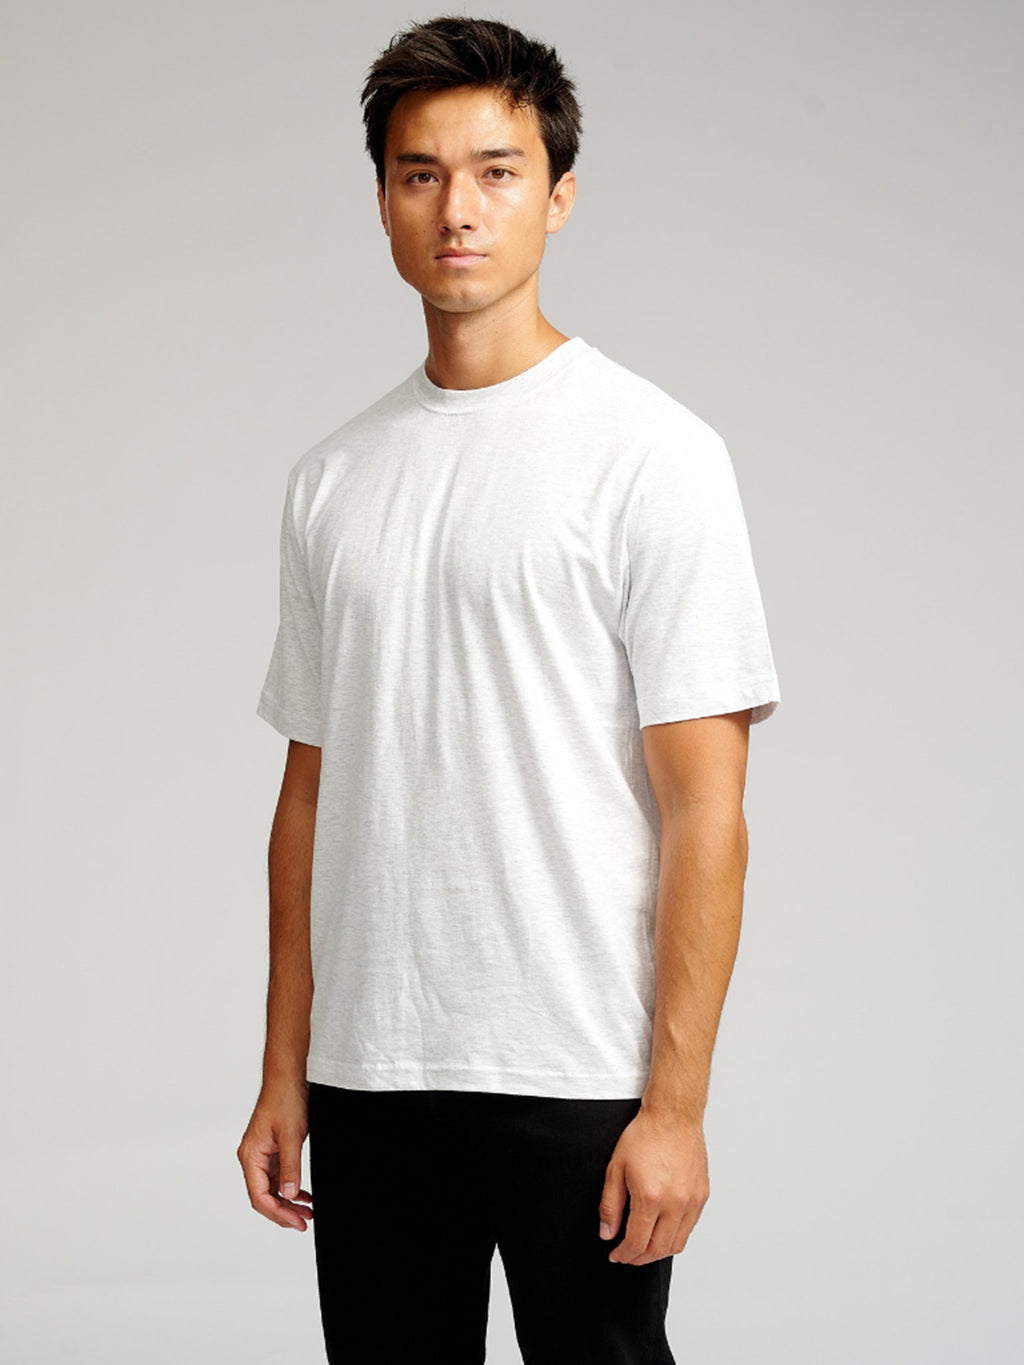 Camiseta de gran tamaño - gris claro